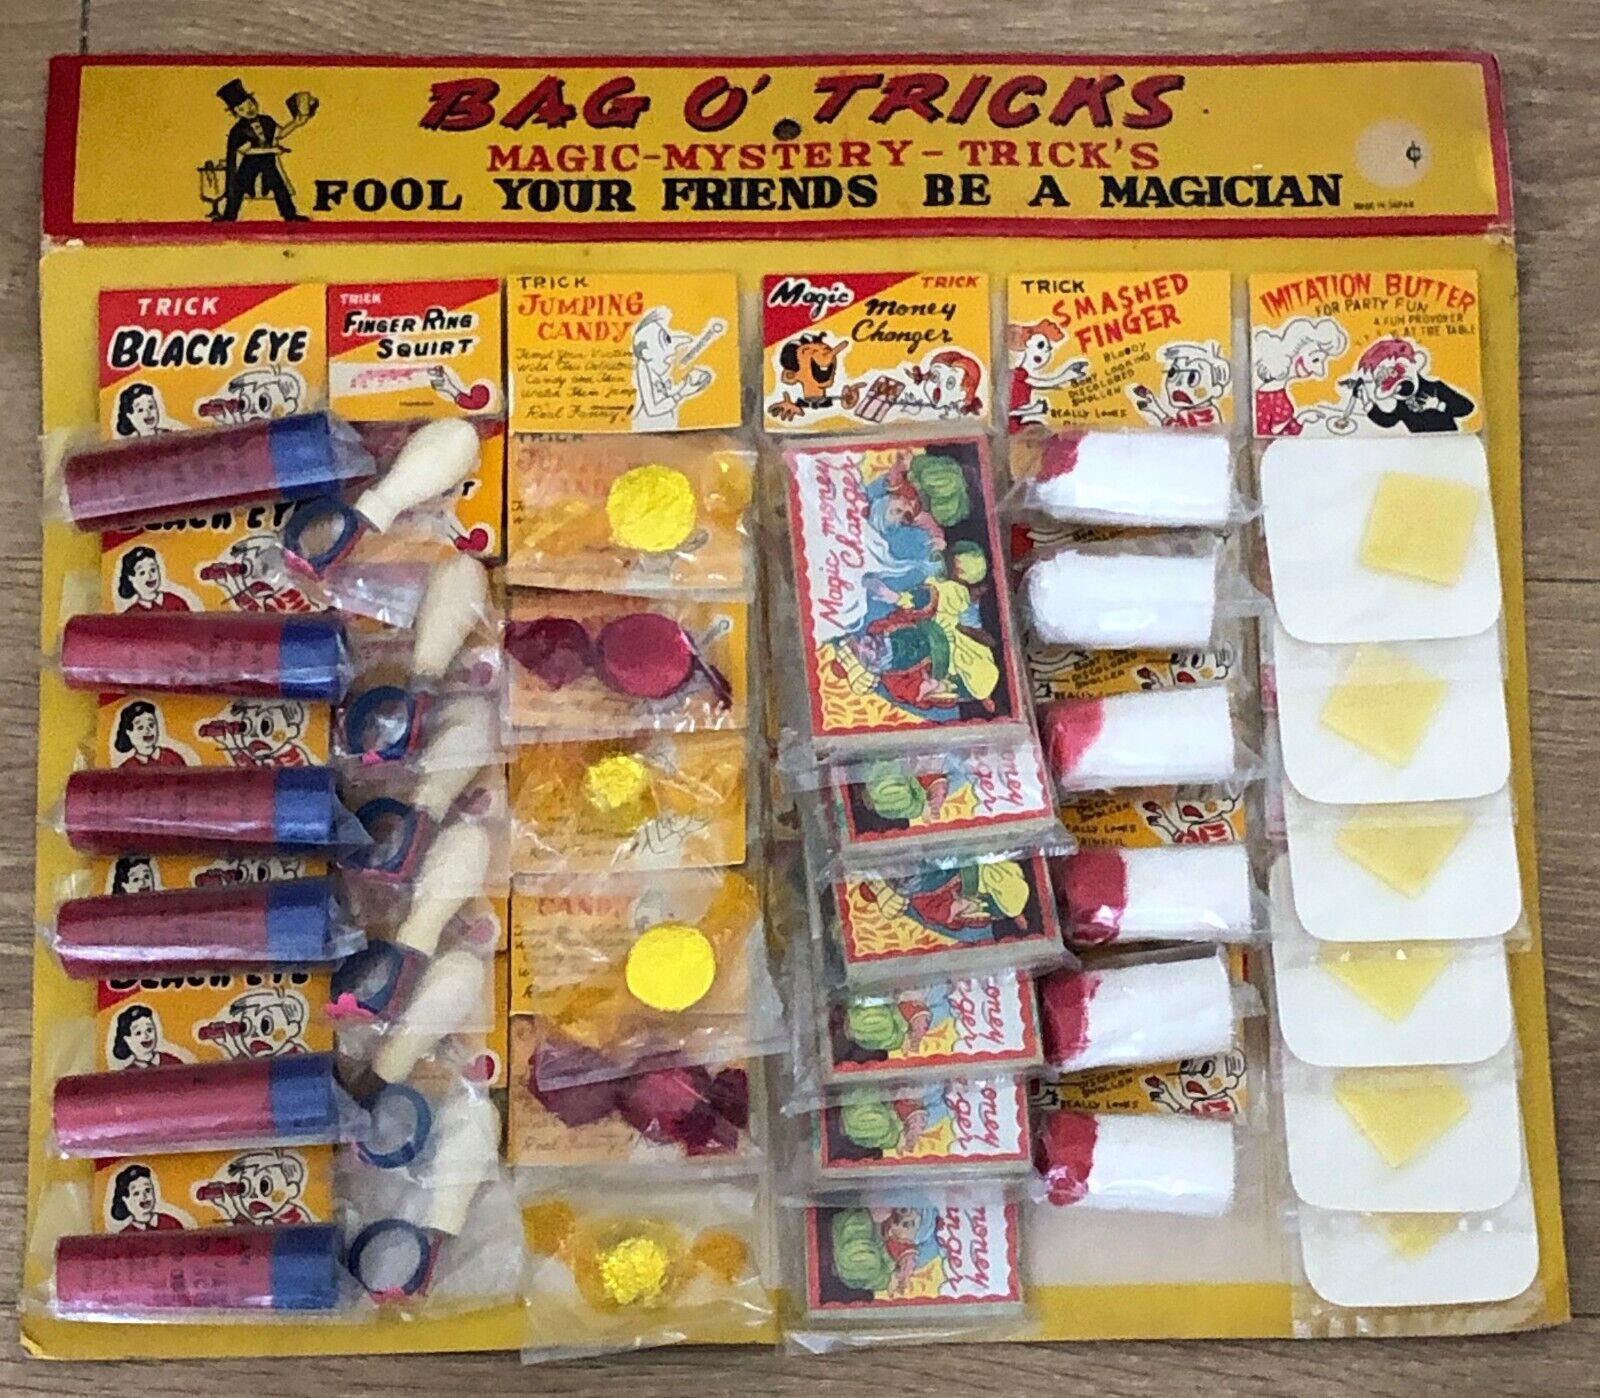 Magic Toys Display Tricks Store Vintage Bag 'O Tricks 1950s Full Rack Card